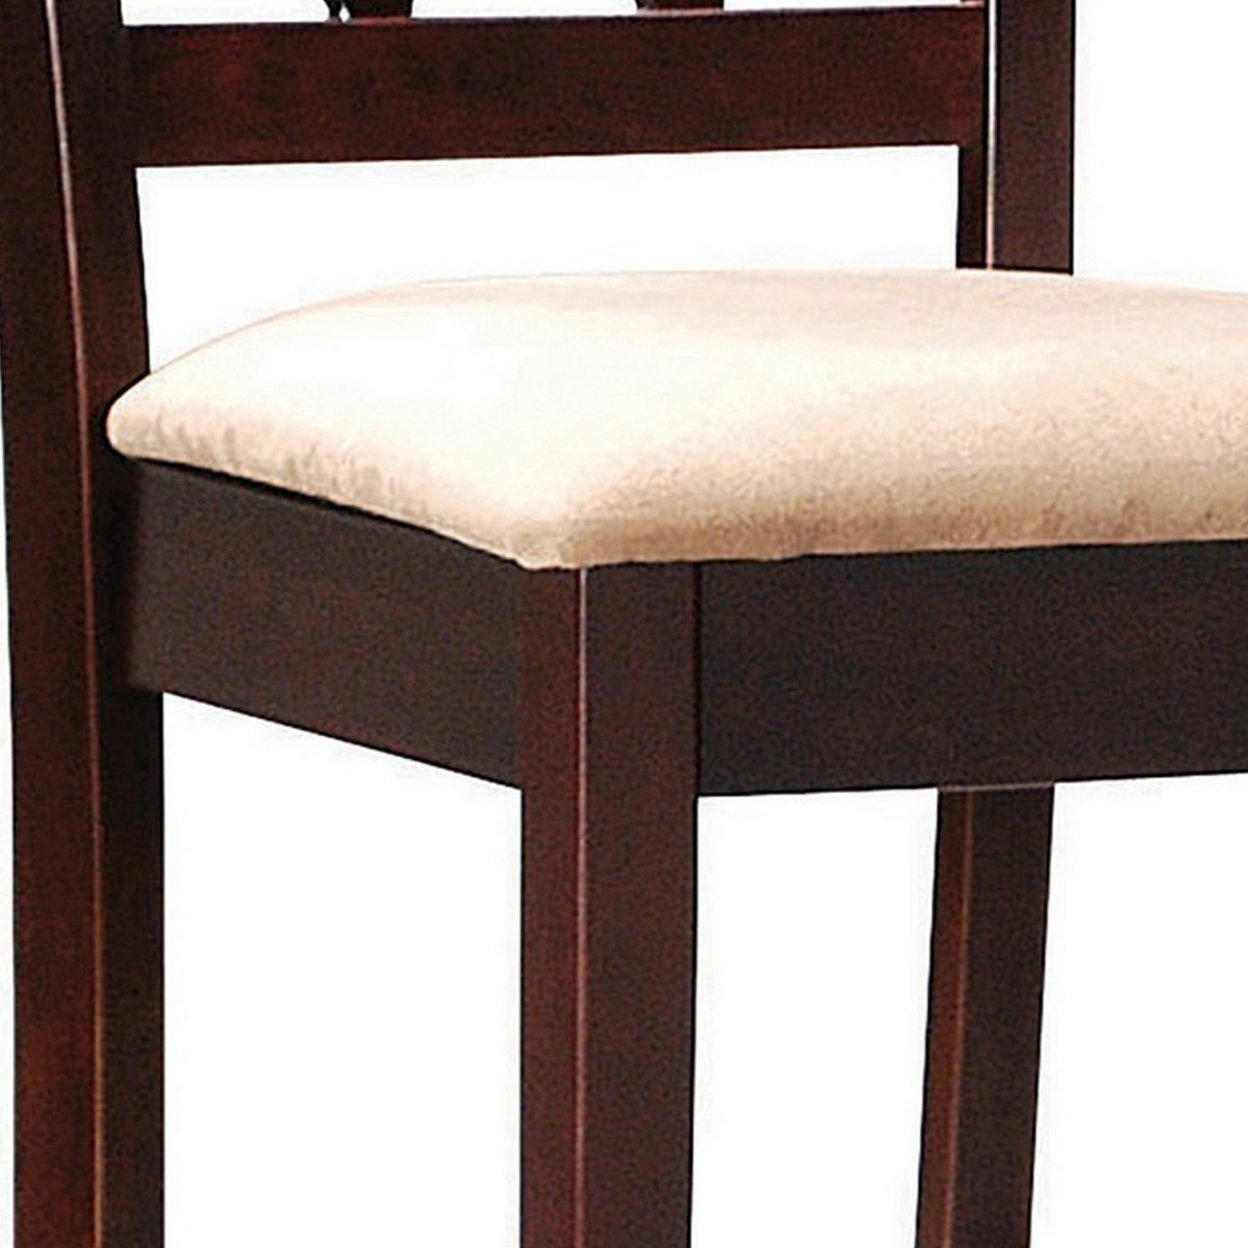 25 Inch Counter Height Stool, Lattice Design Back, Tan Fabric Seat, Brown- Saltoro Sherpi